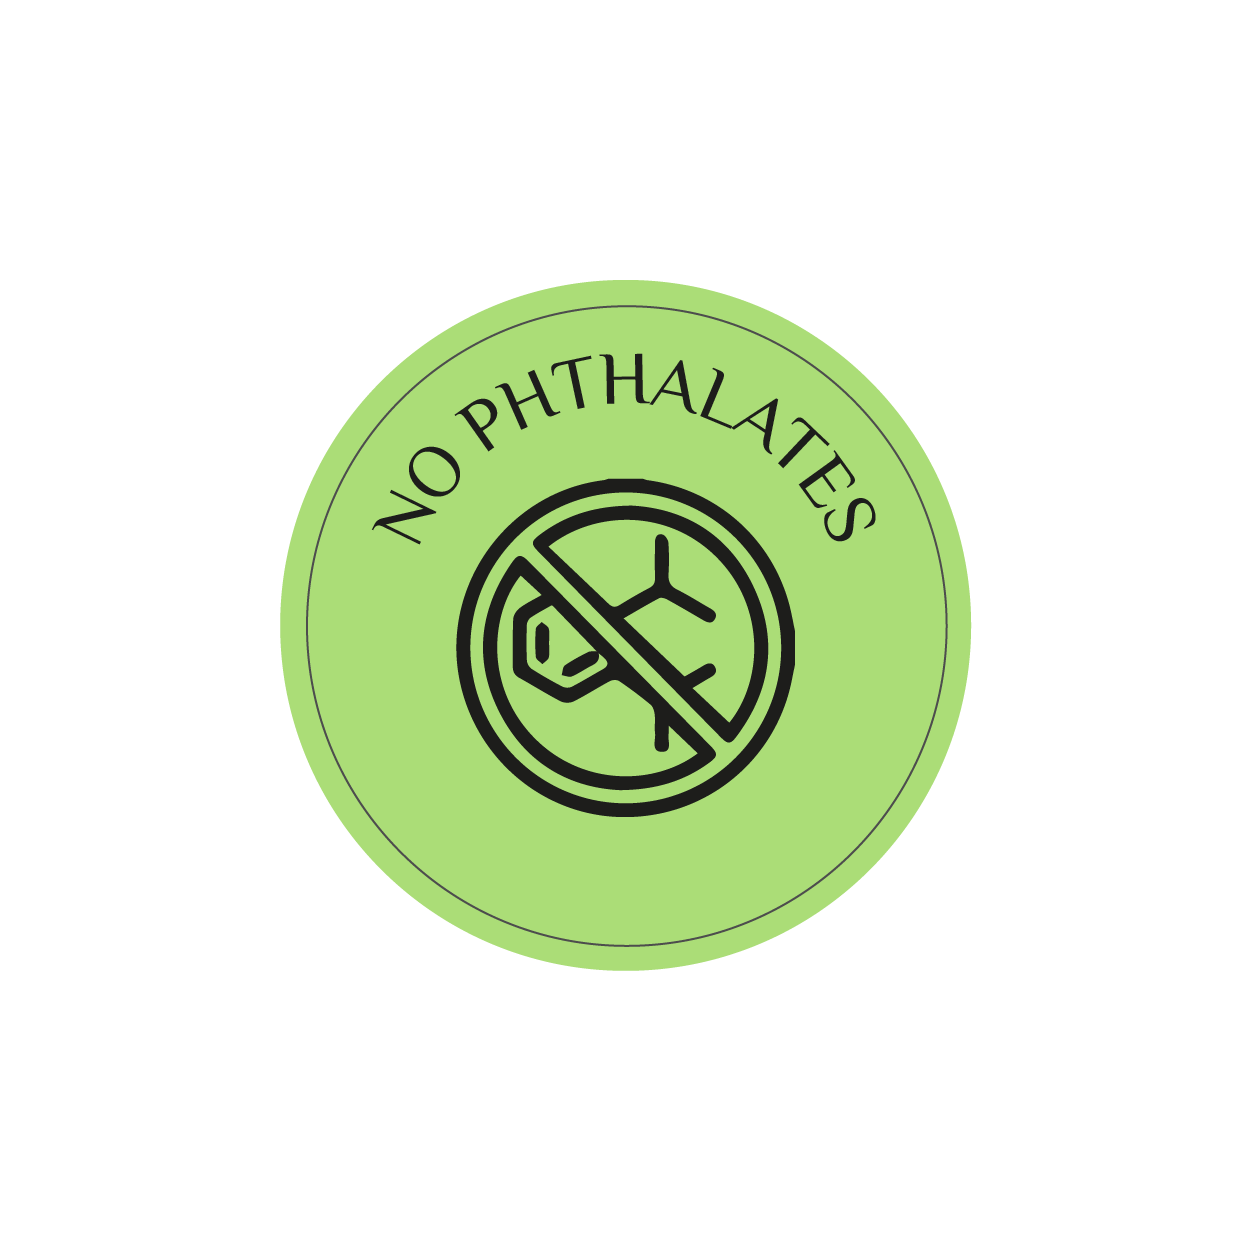 No Phthalates